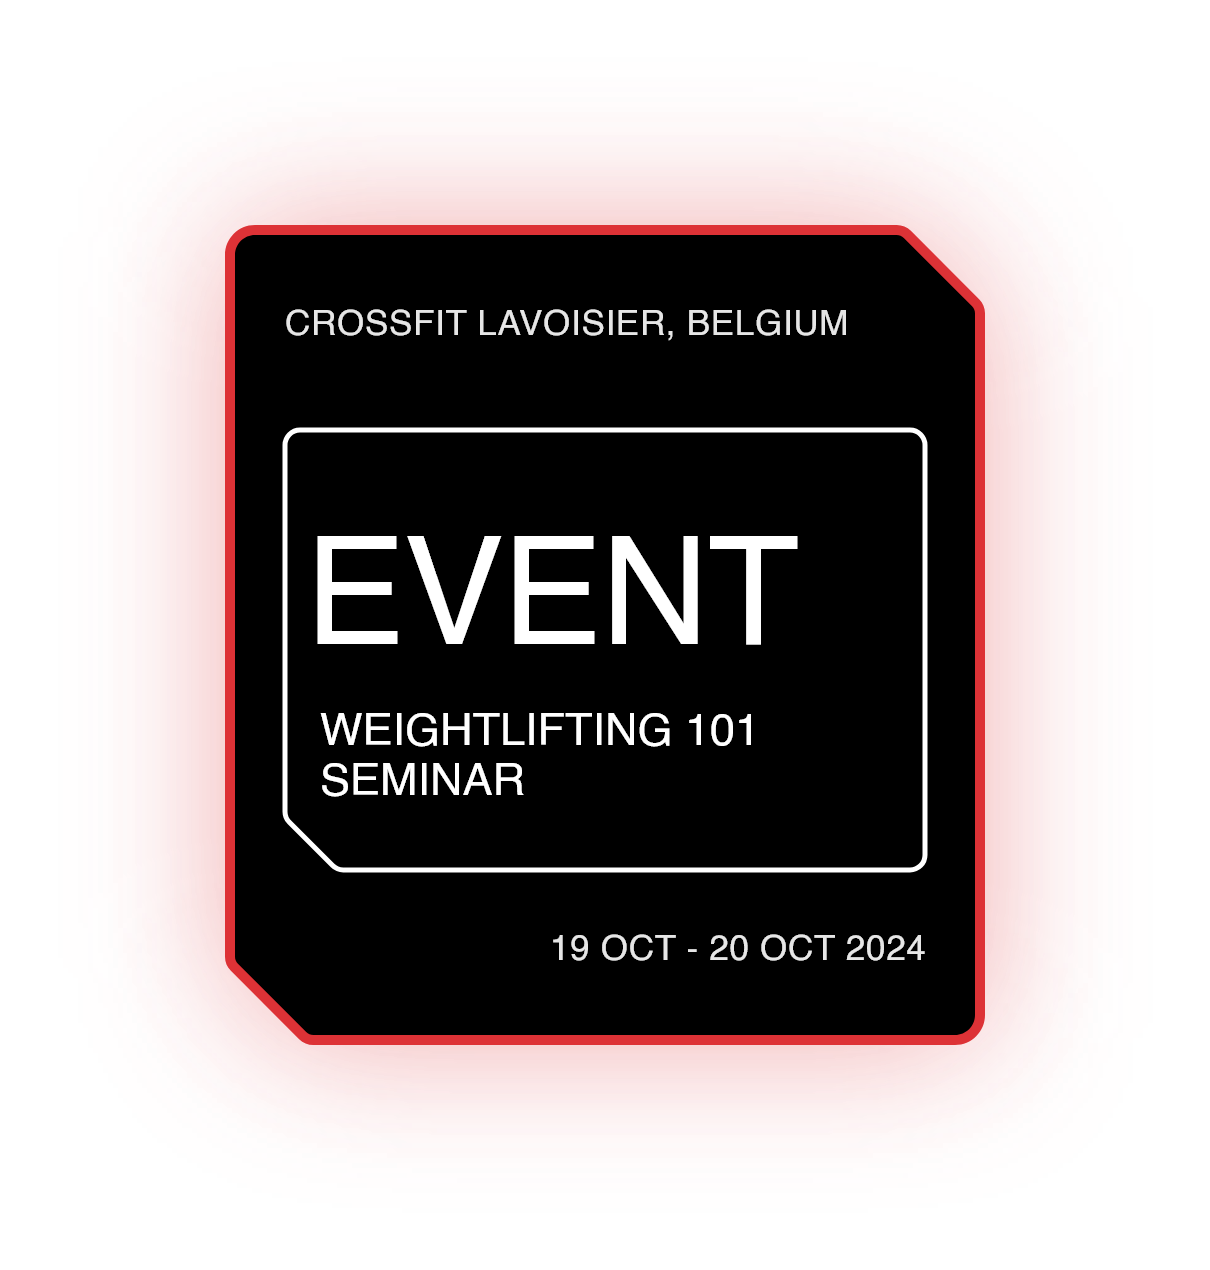 Weightlifting 101 Seminar - Brussels, Belgium